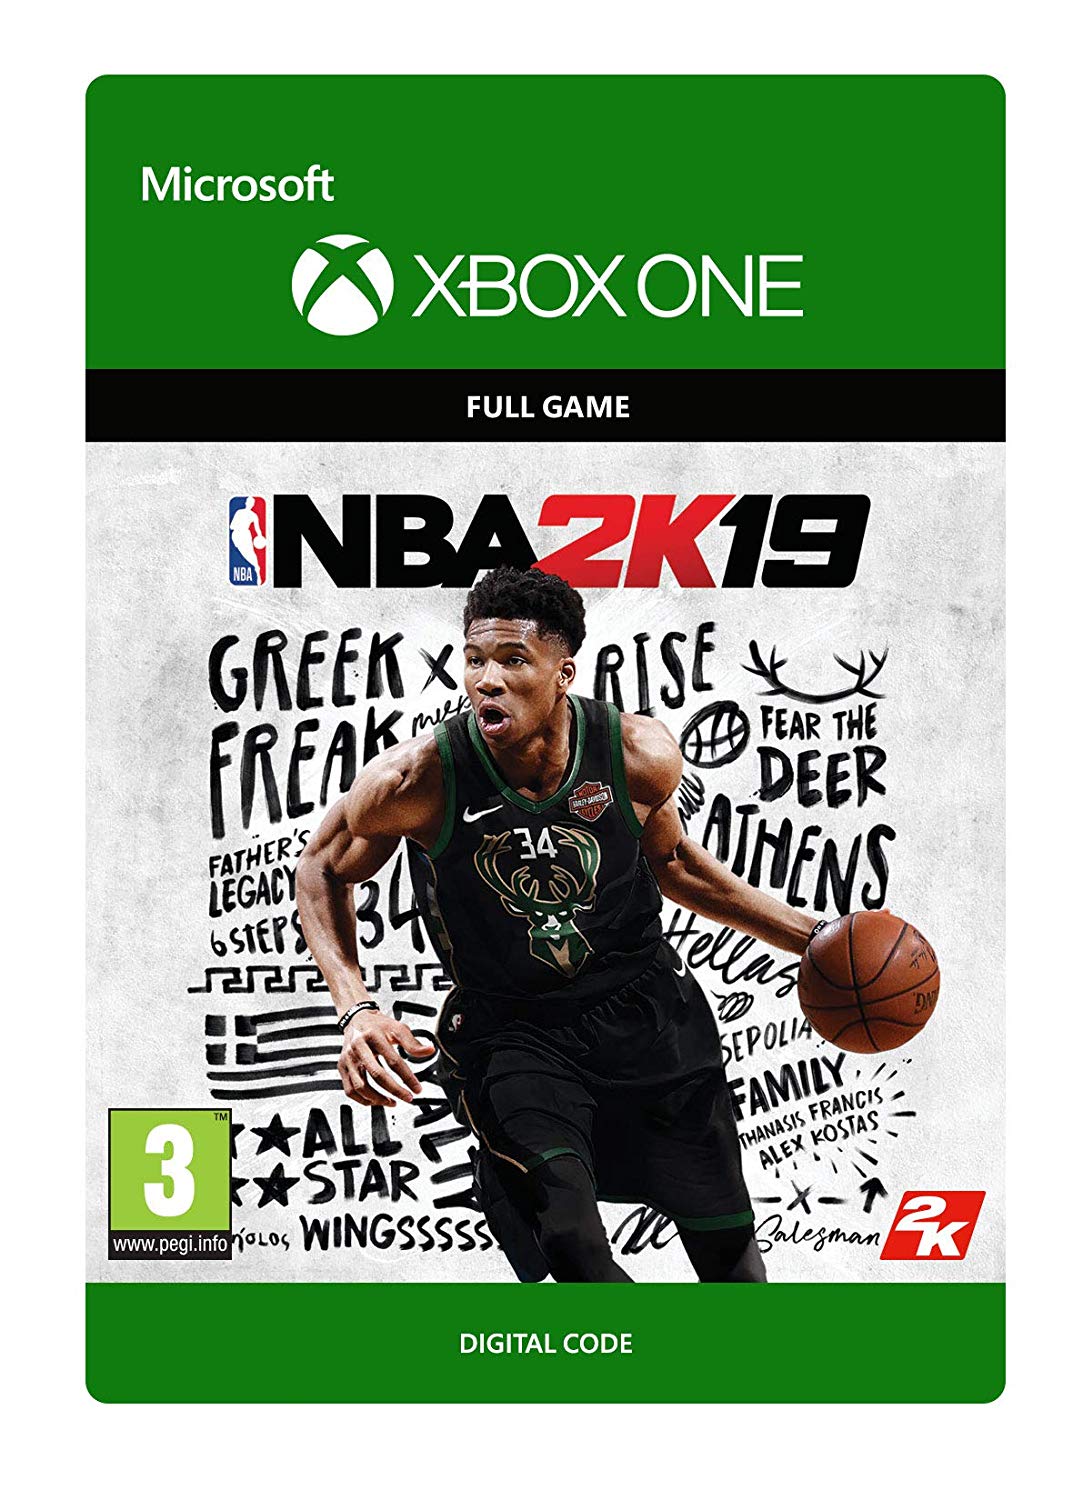 Buy NBA 2K19 Digital Download Key (Xbox One): USA with crypto